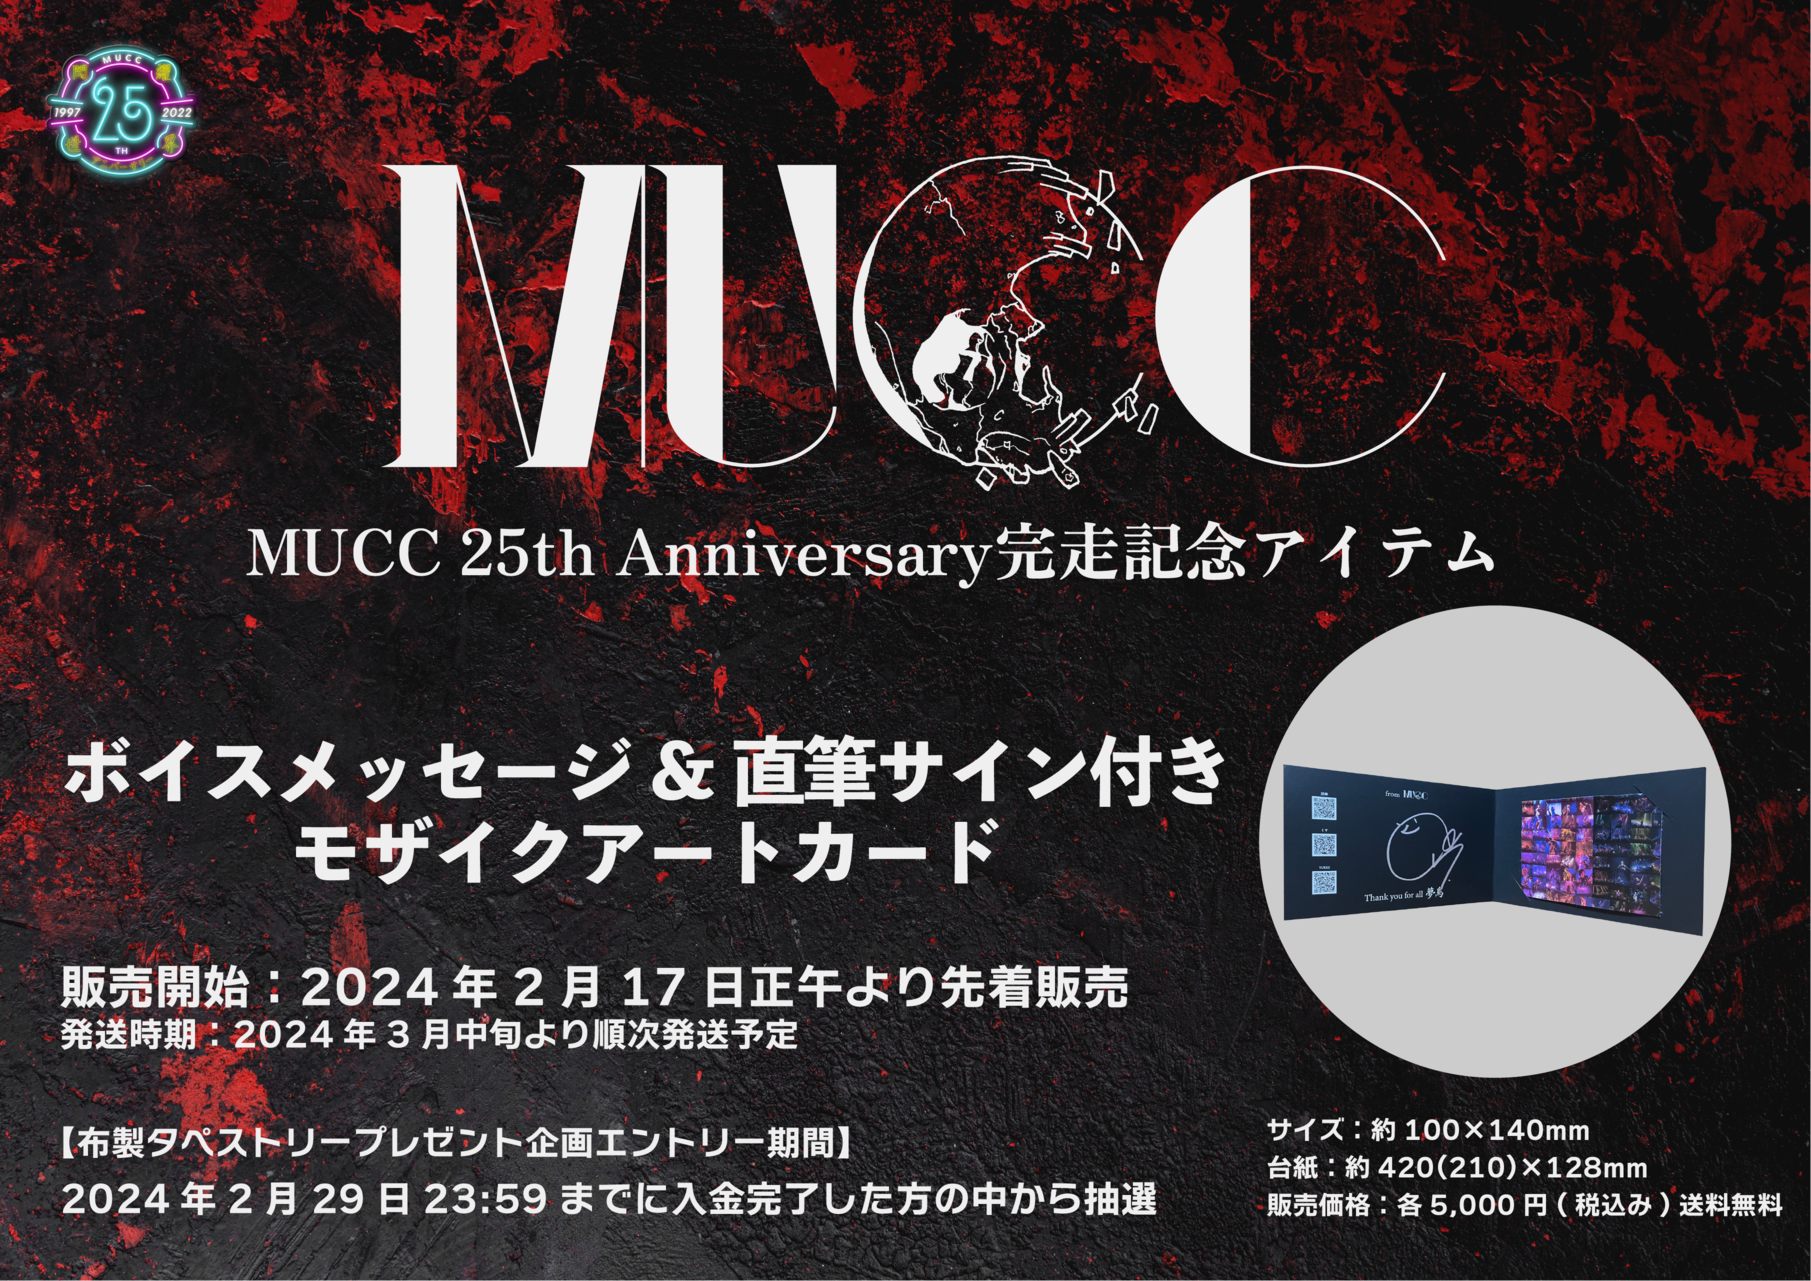 『MUCC 25th Anniversary』ONLINE SHOP